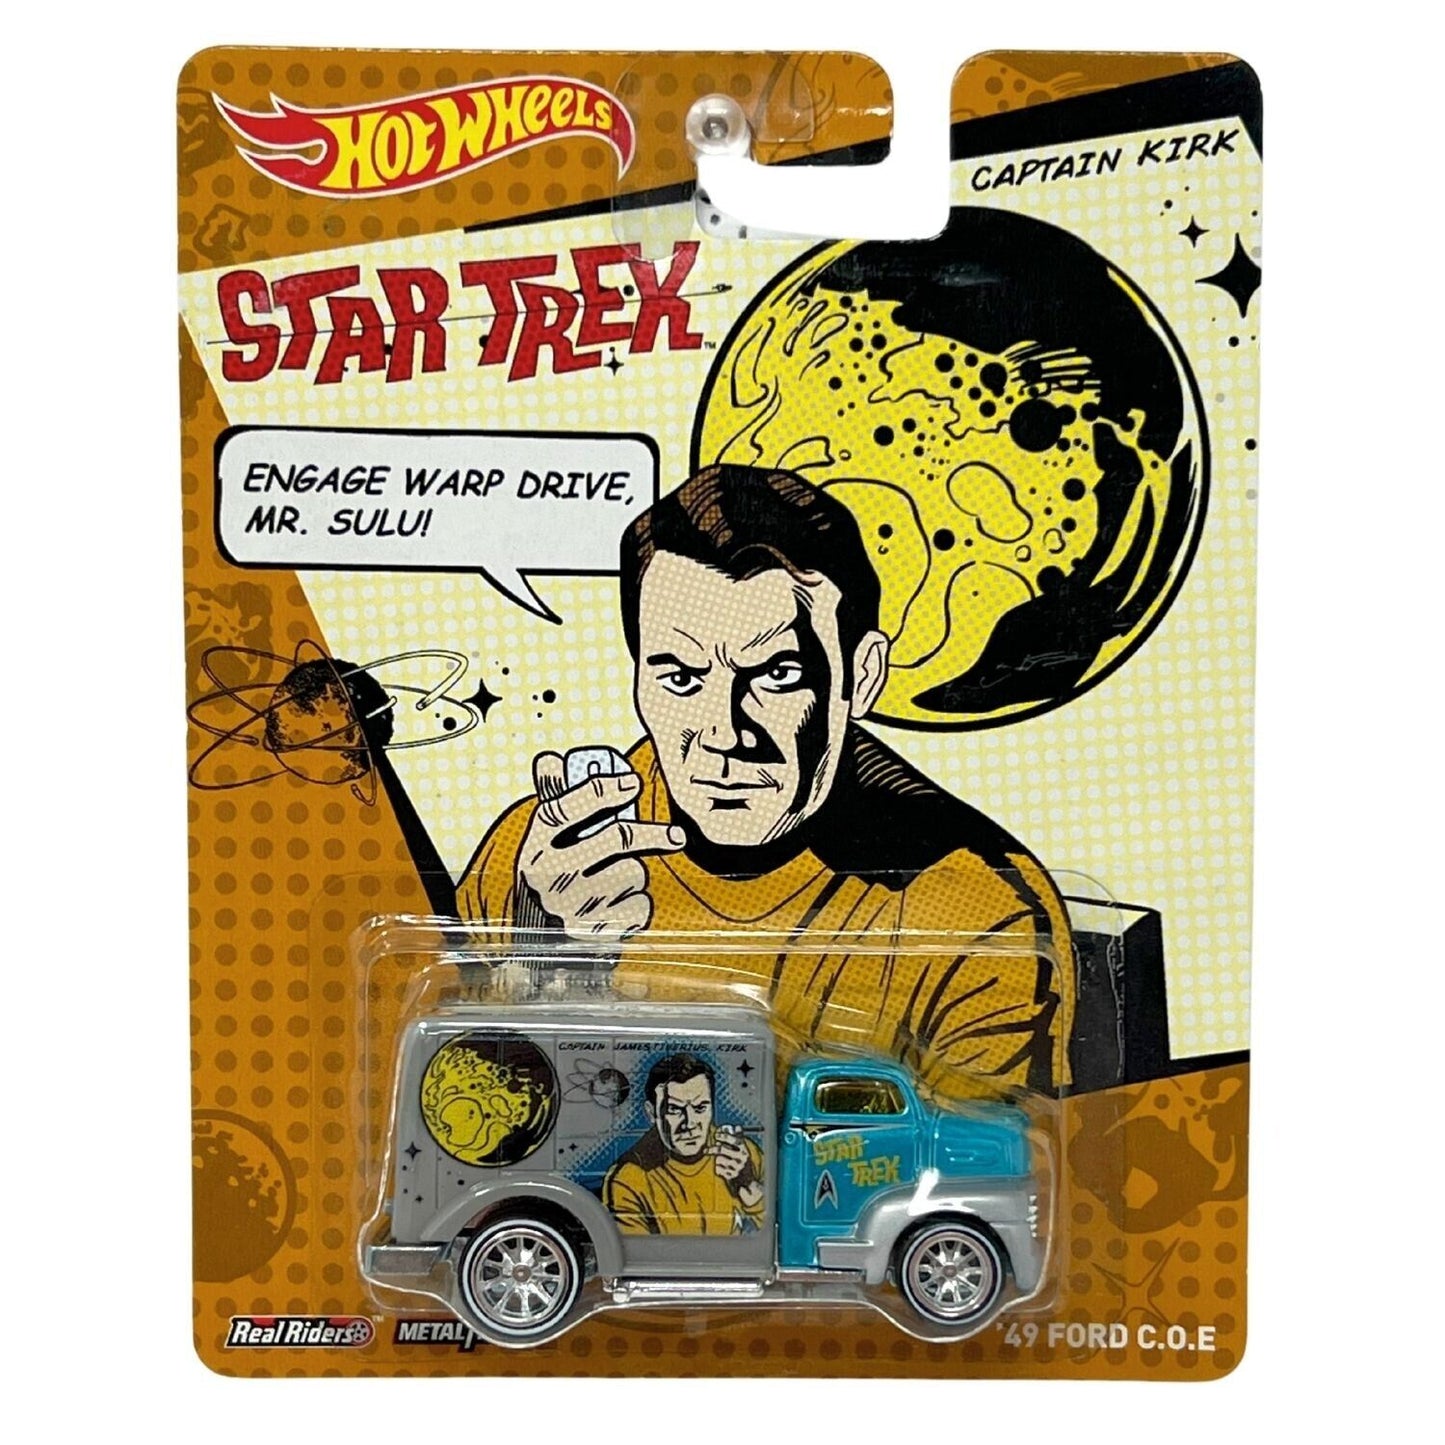 Hot Wheels Star Trek Captain Kirk '49 Ford C.O.E. Real Riders 1:64 Diecast